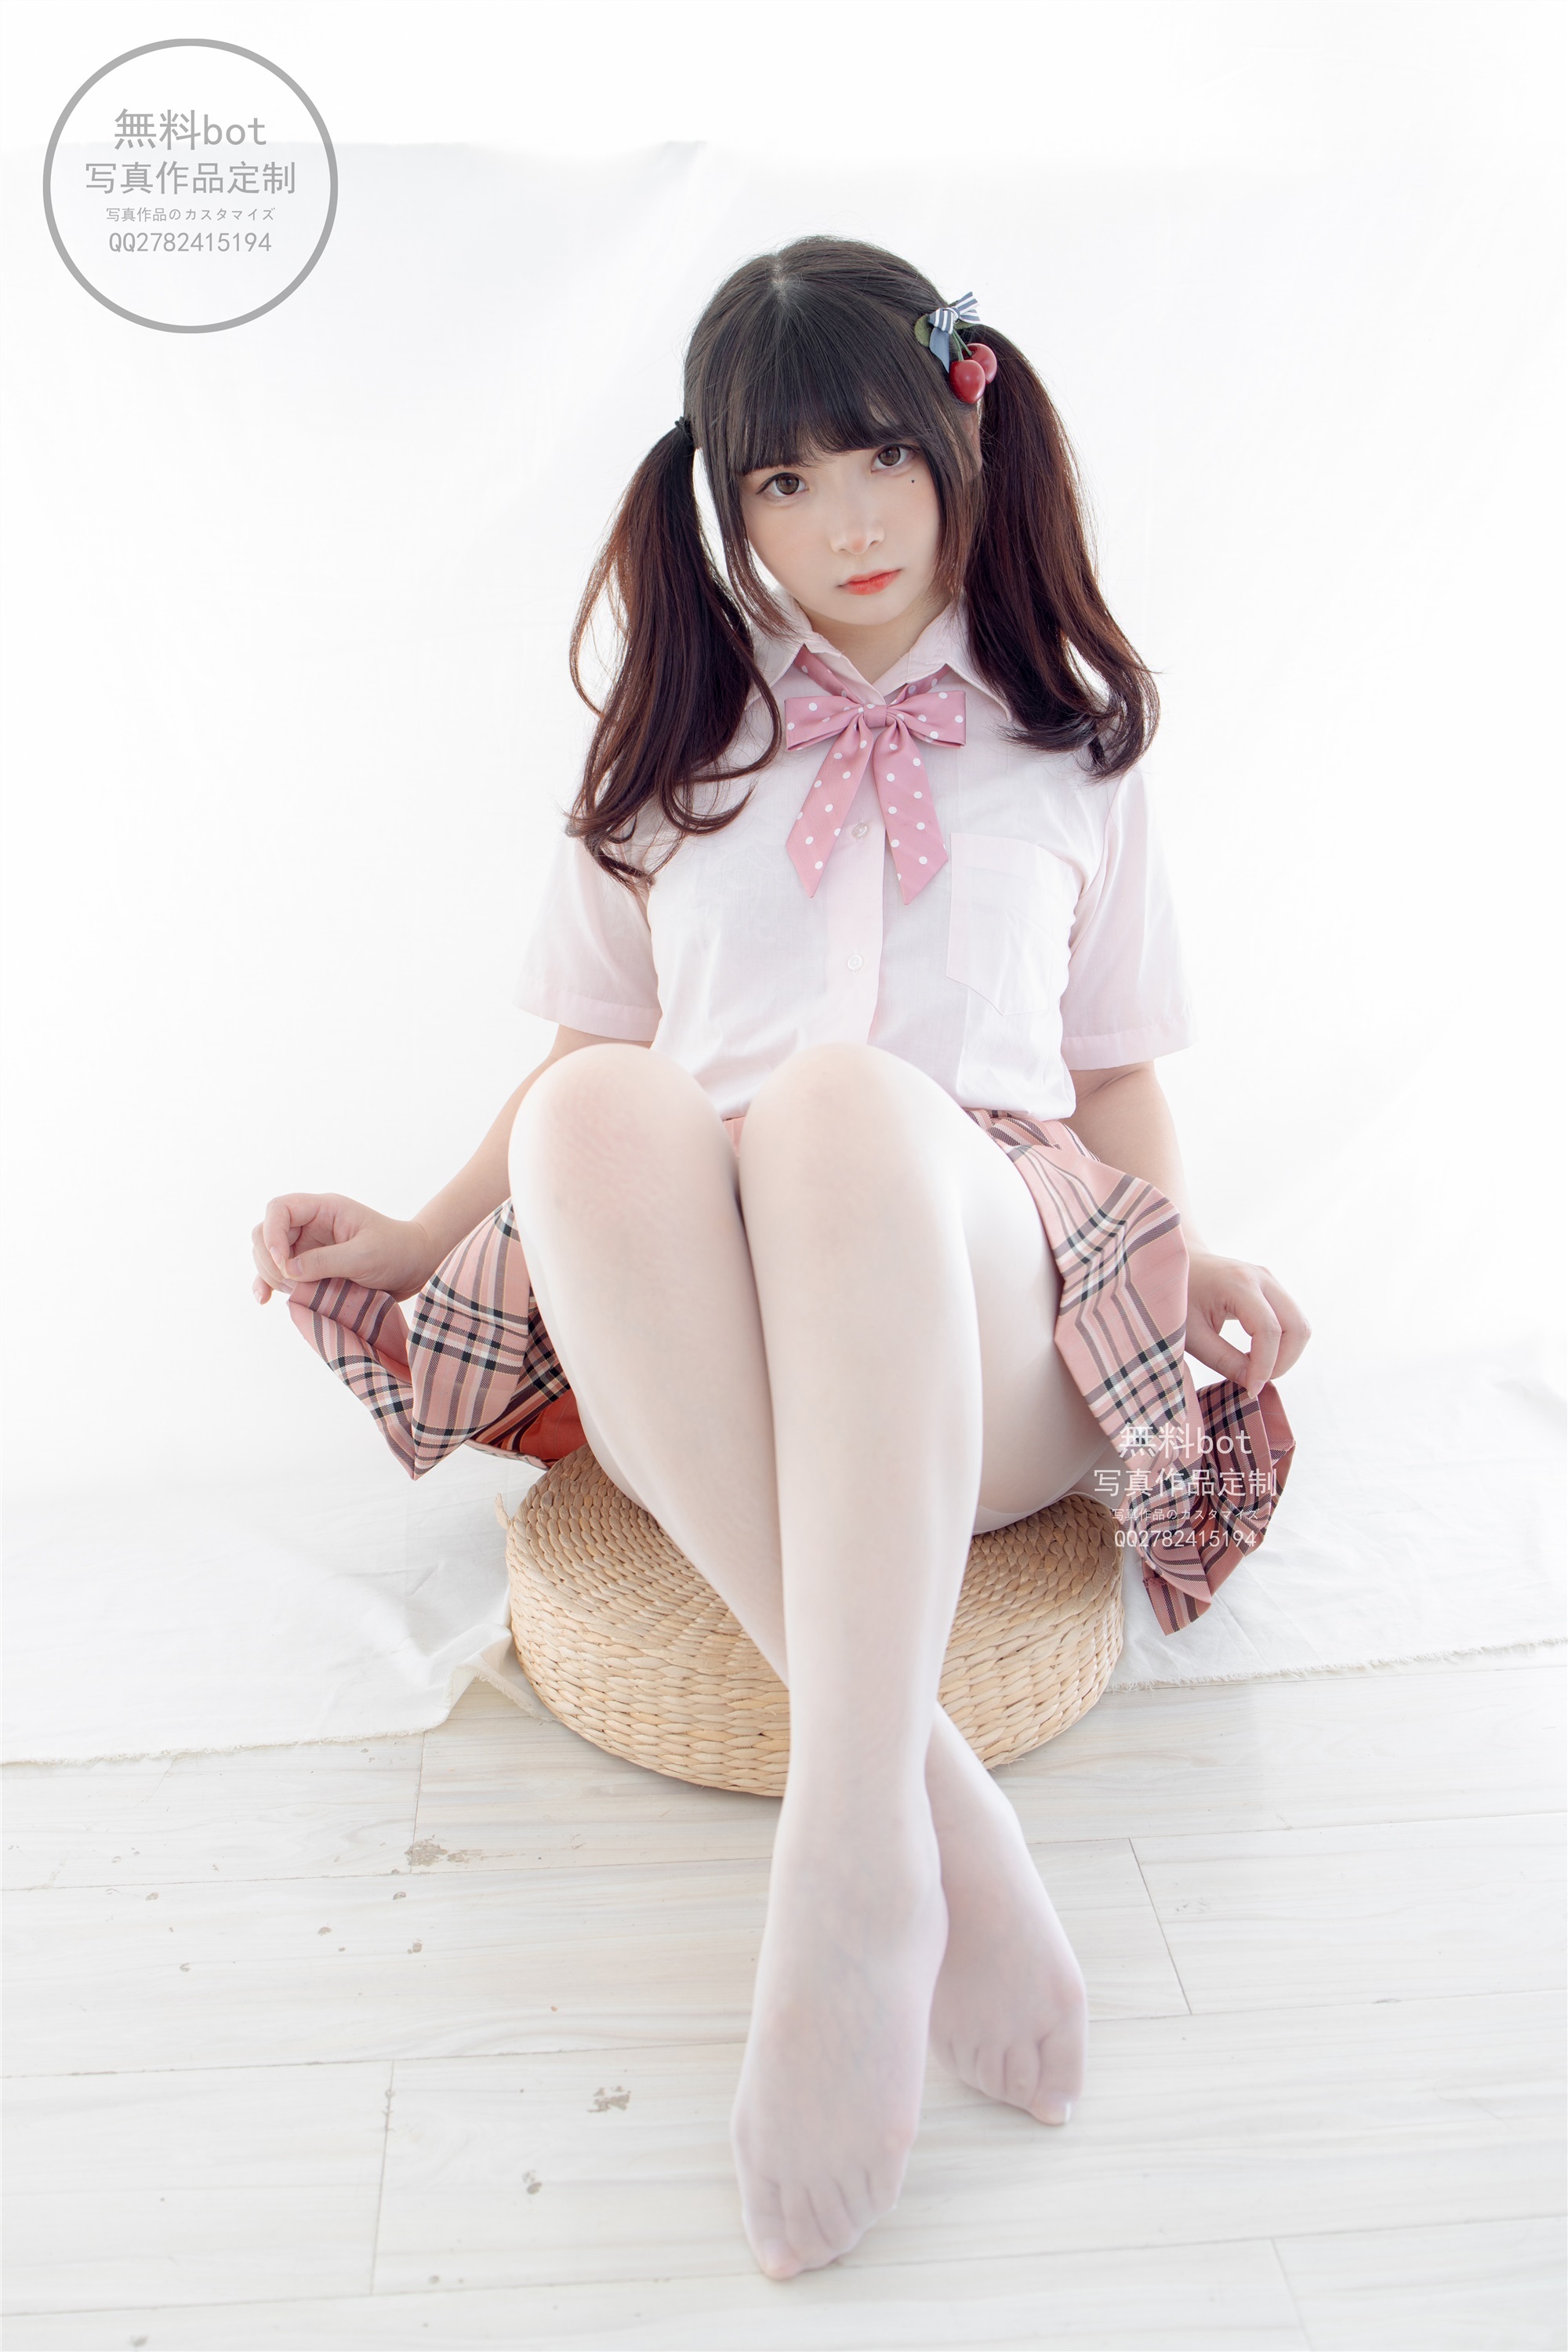 Rose foot photo of Senluo group no material-001 JK plaid skirt